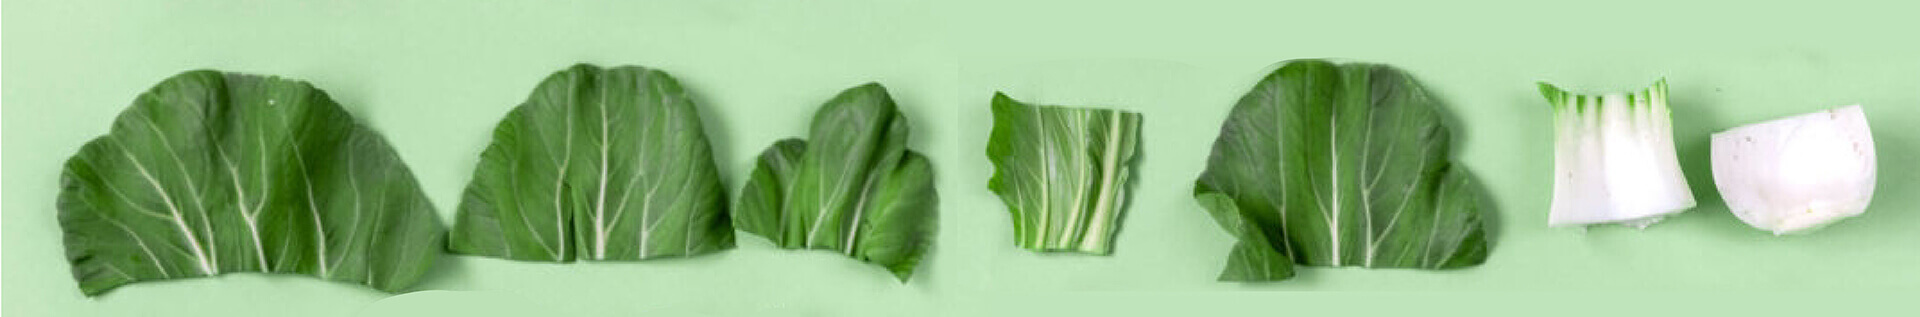 Cut lettuce